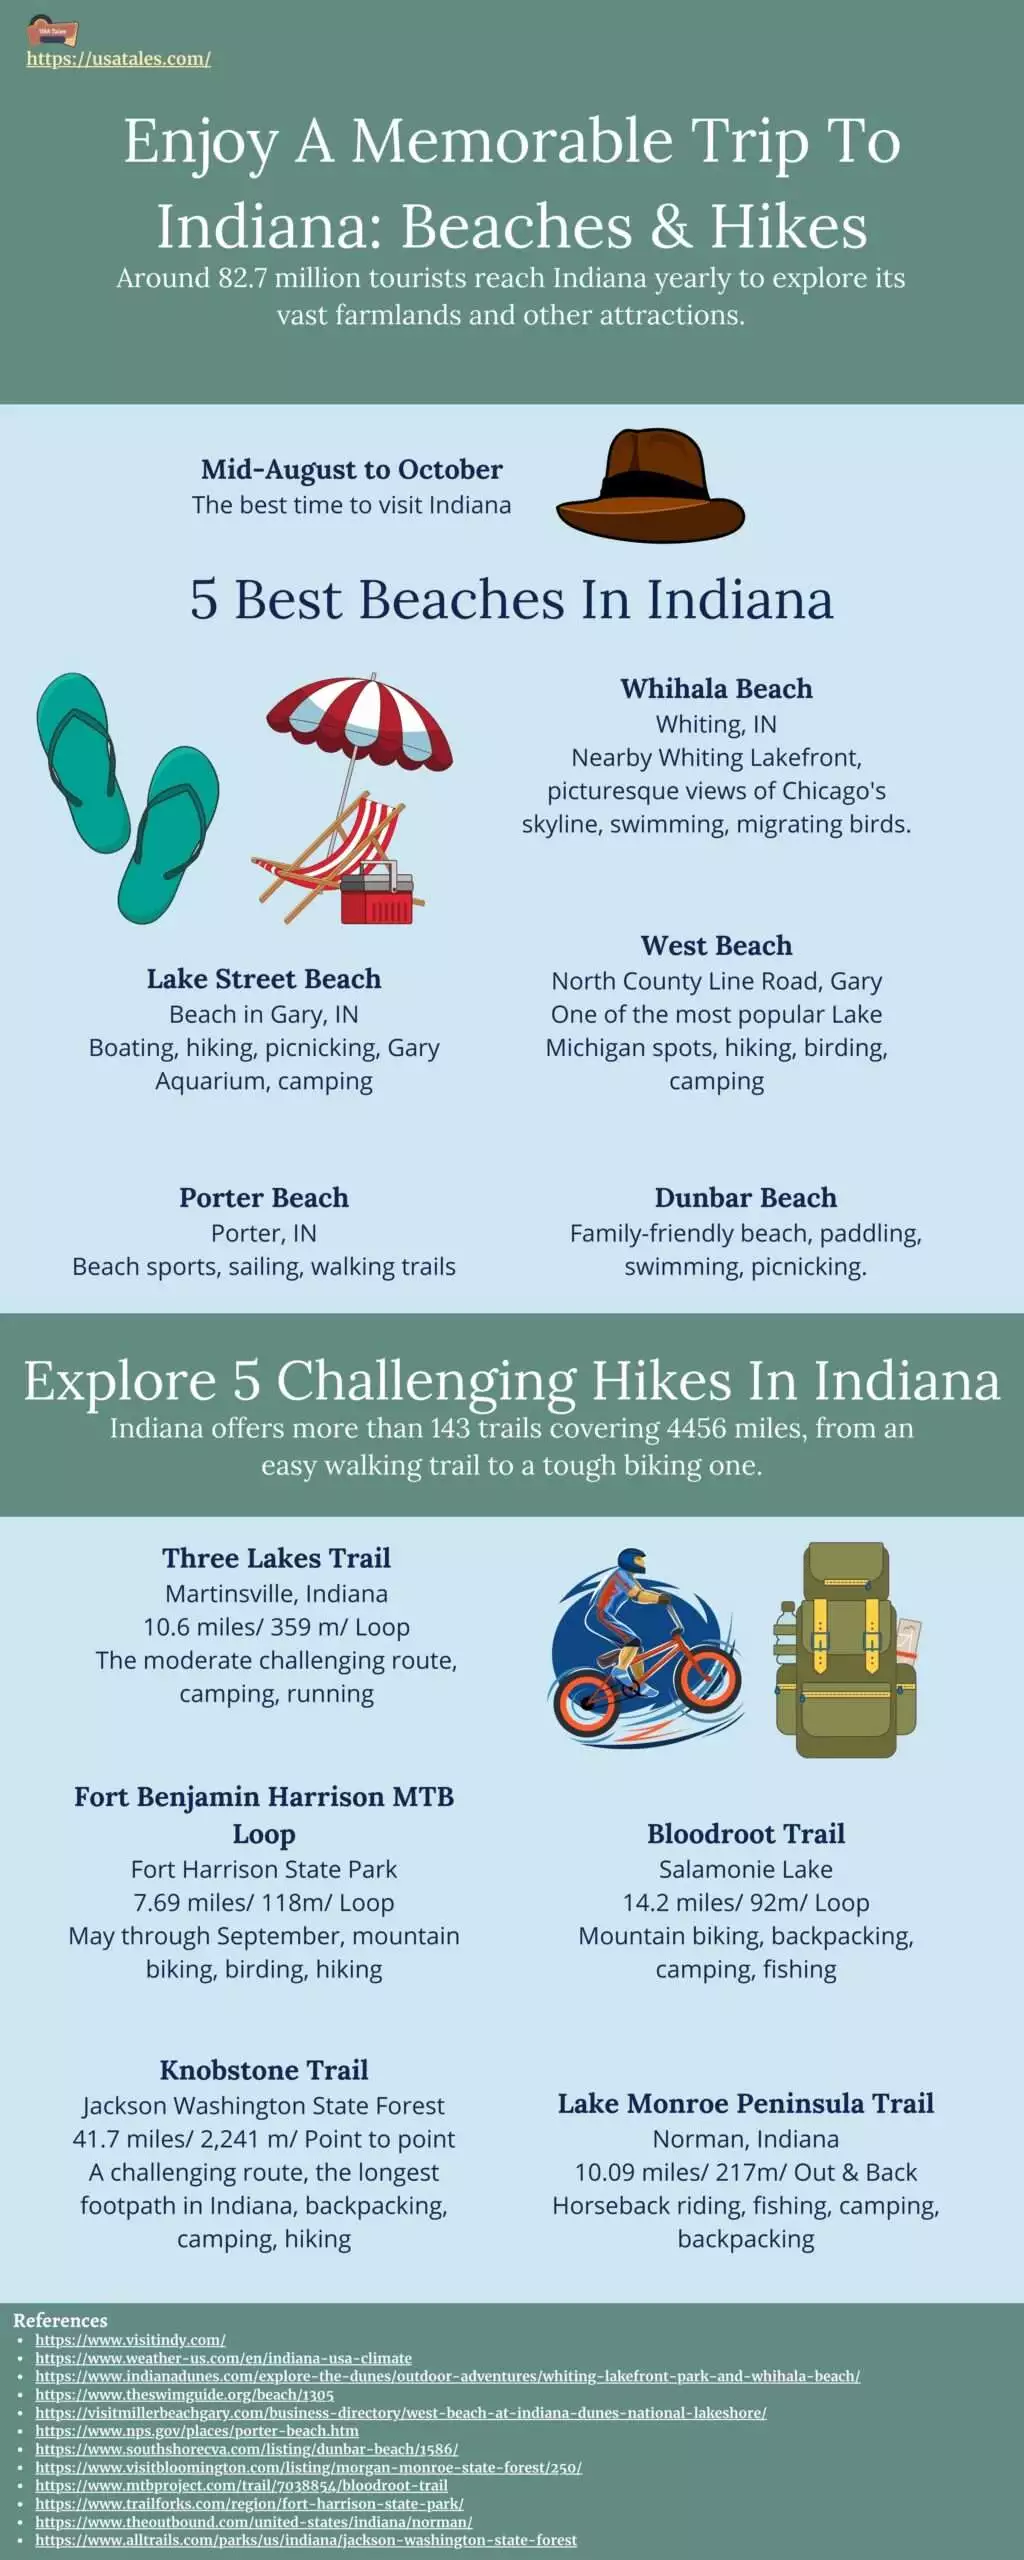 Enjoy A Memorable Trip To Indiana Beaches & Hikes